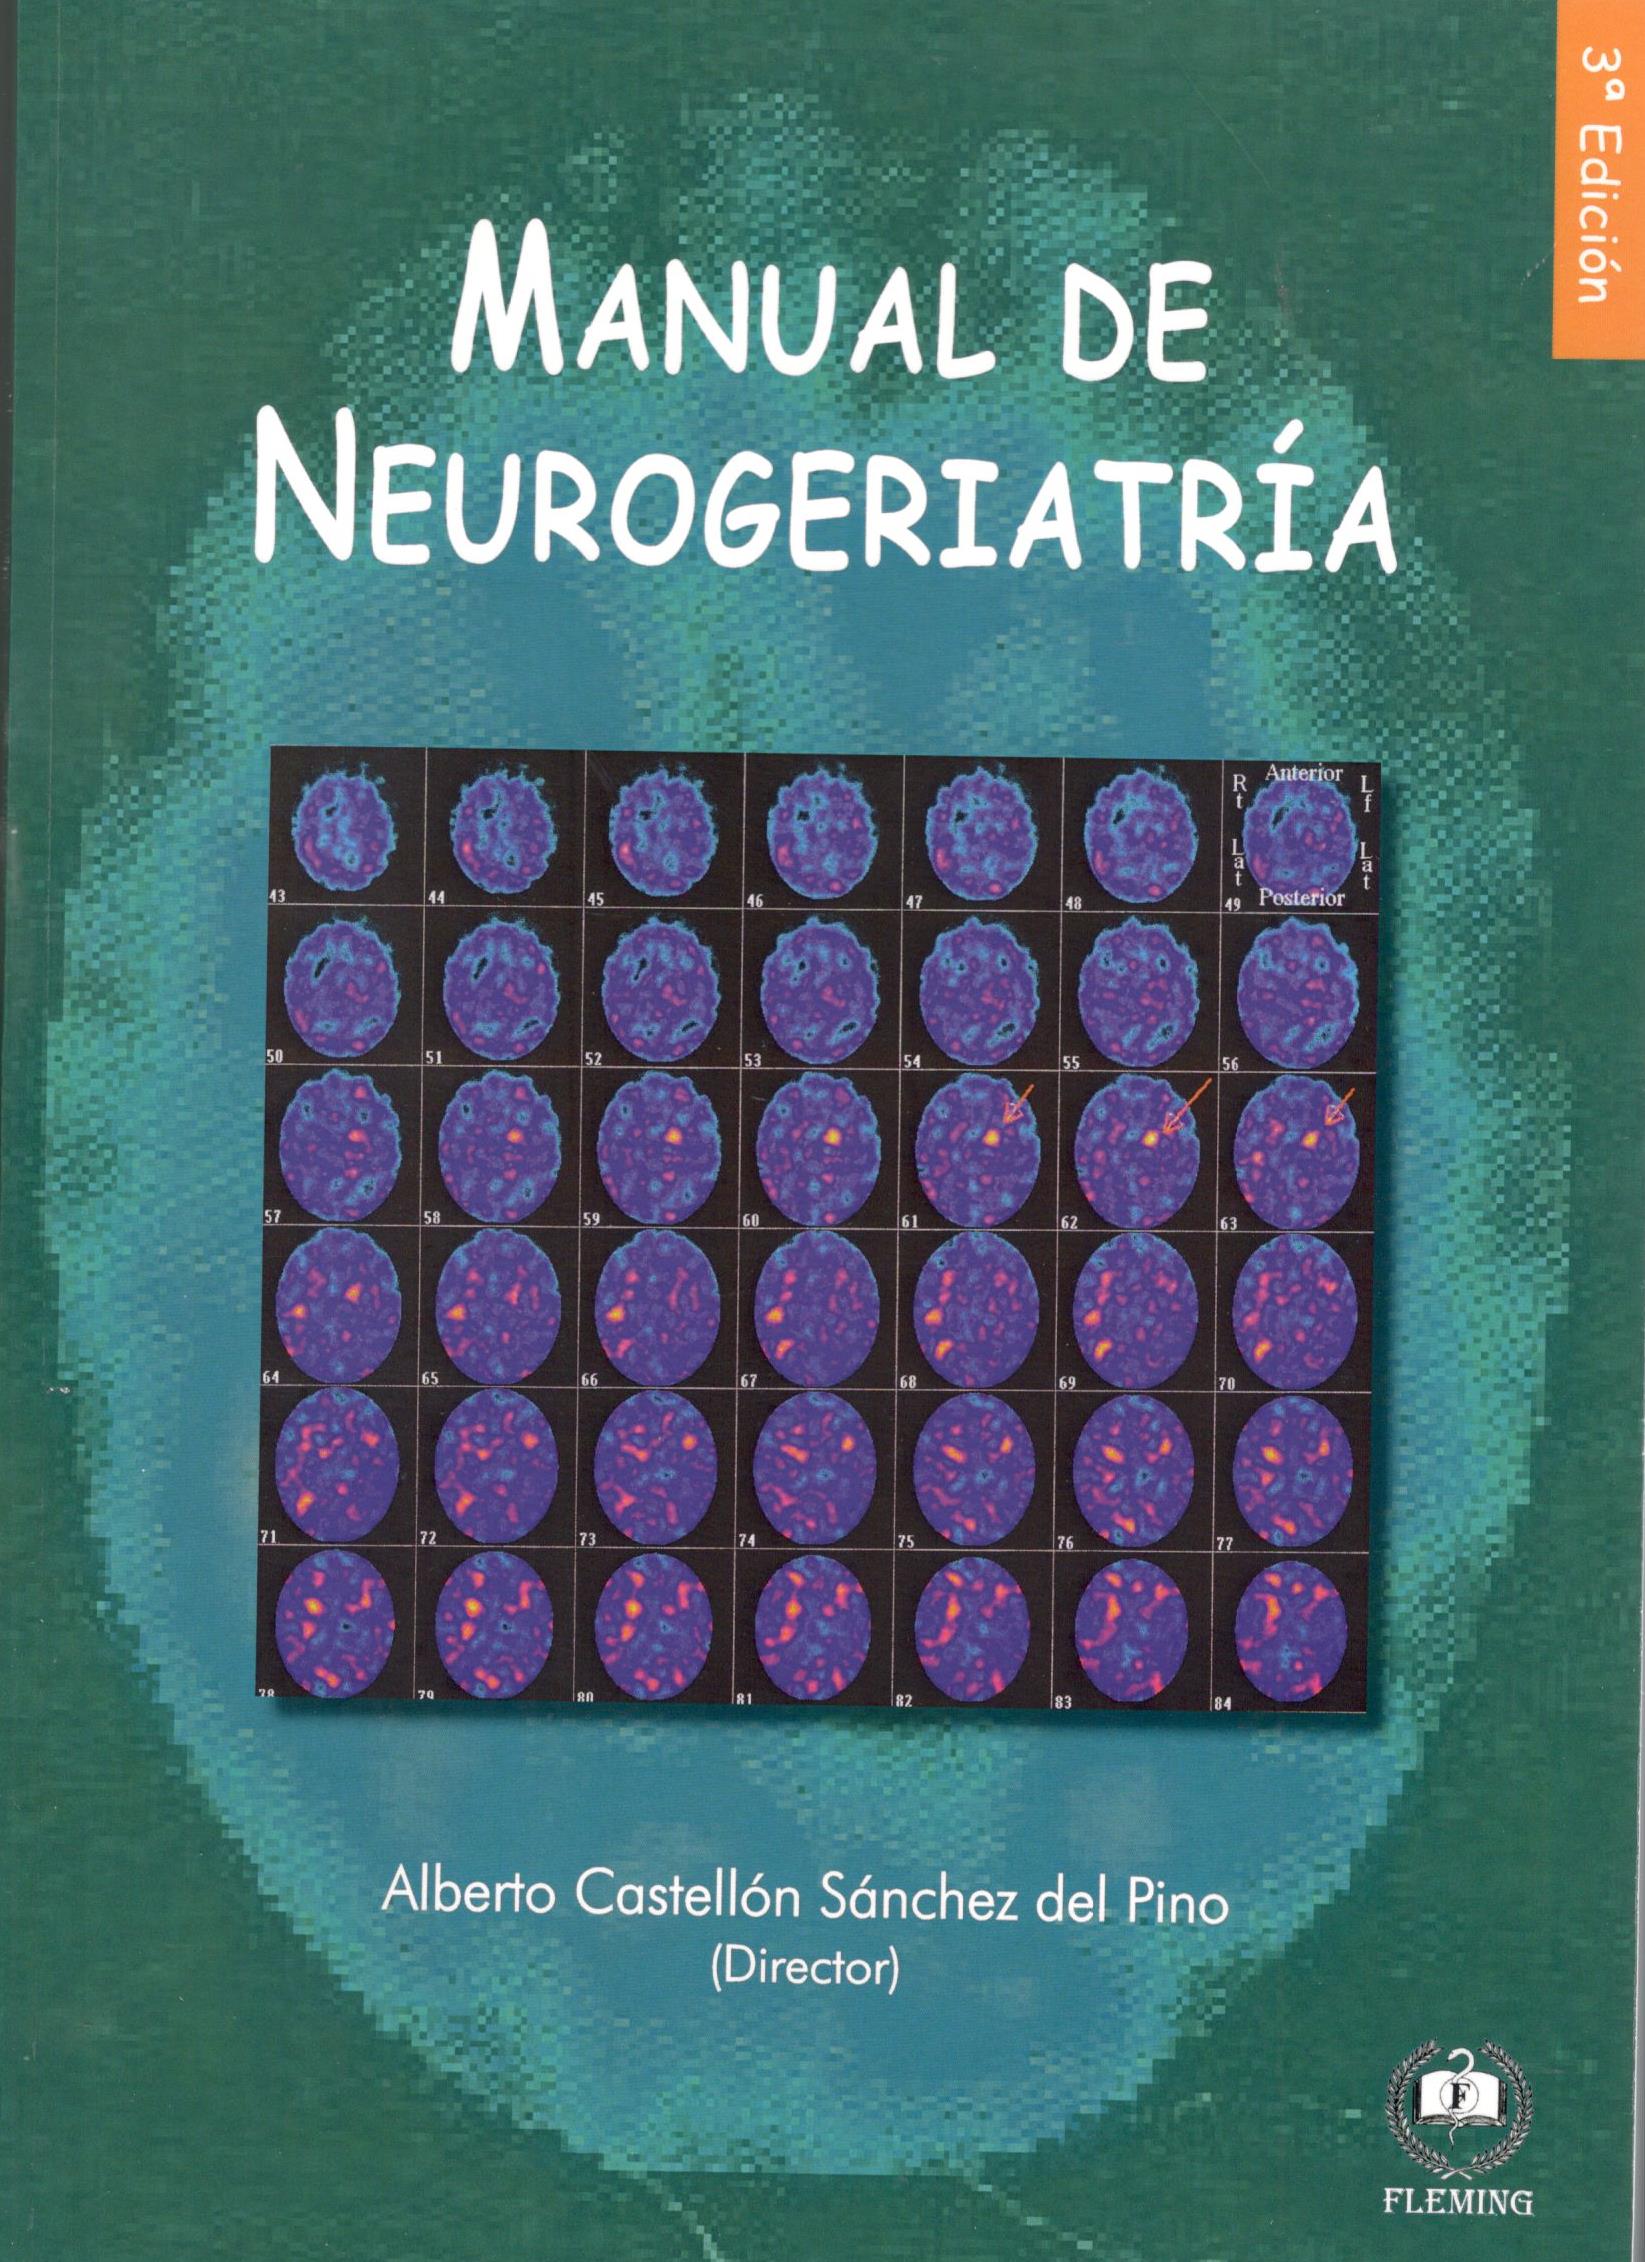 MANUAL DE NEUROGERIATRIA